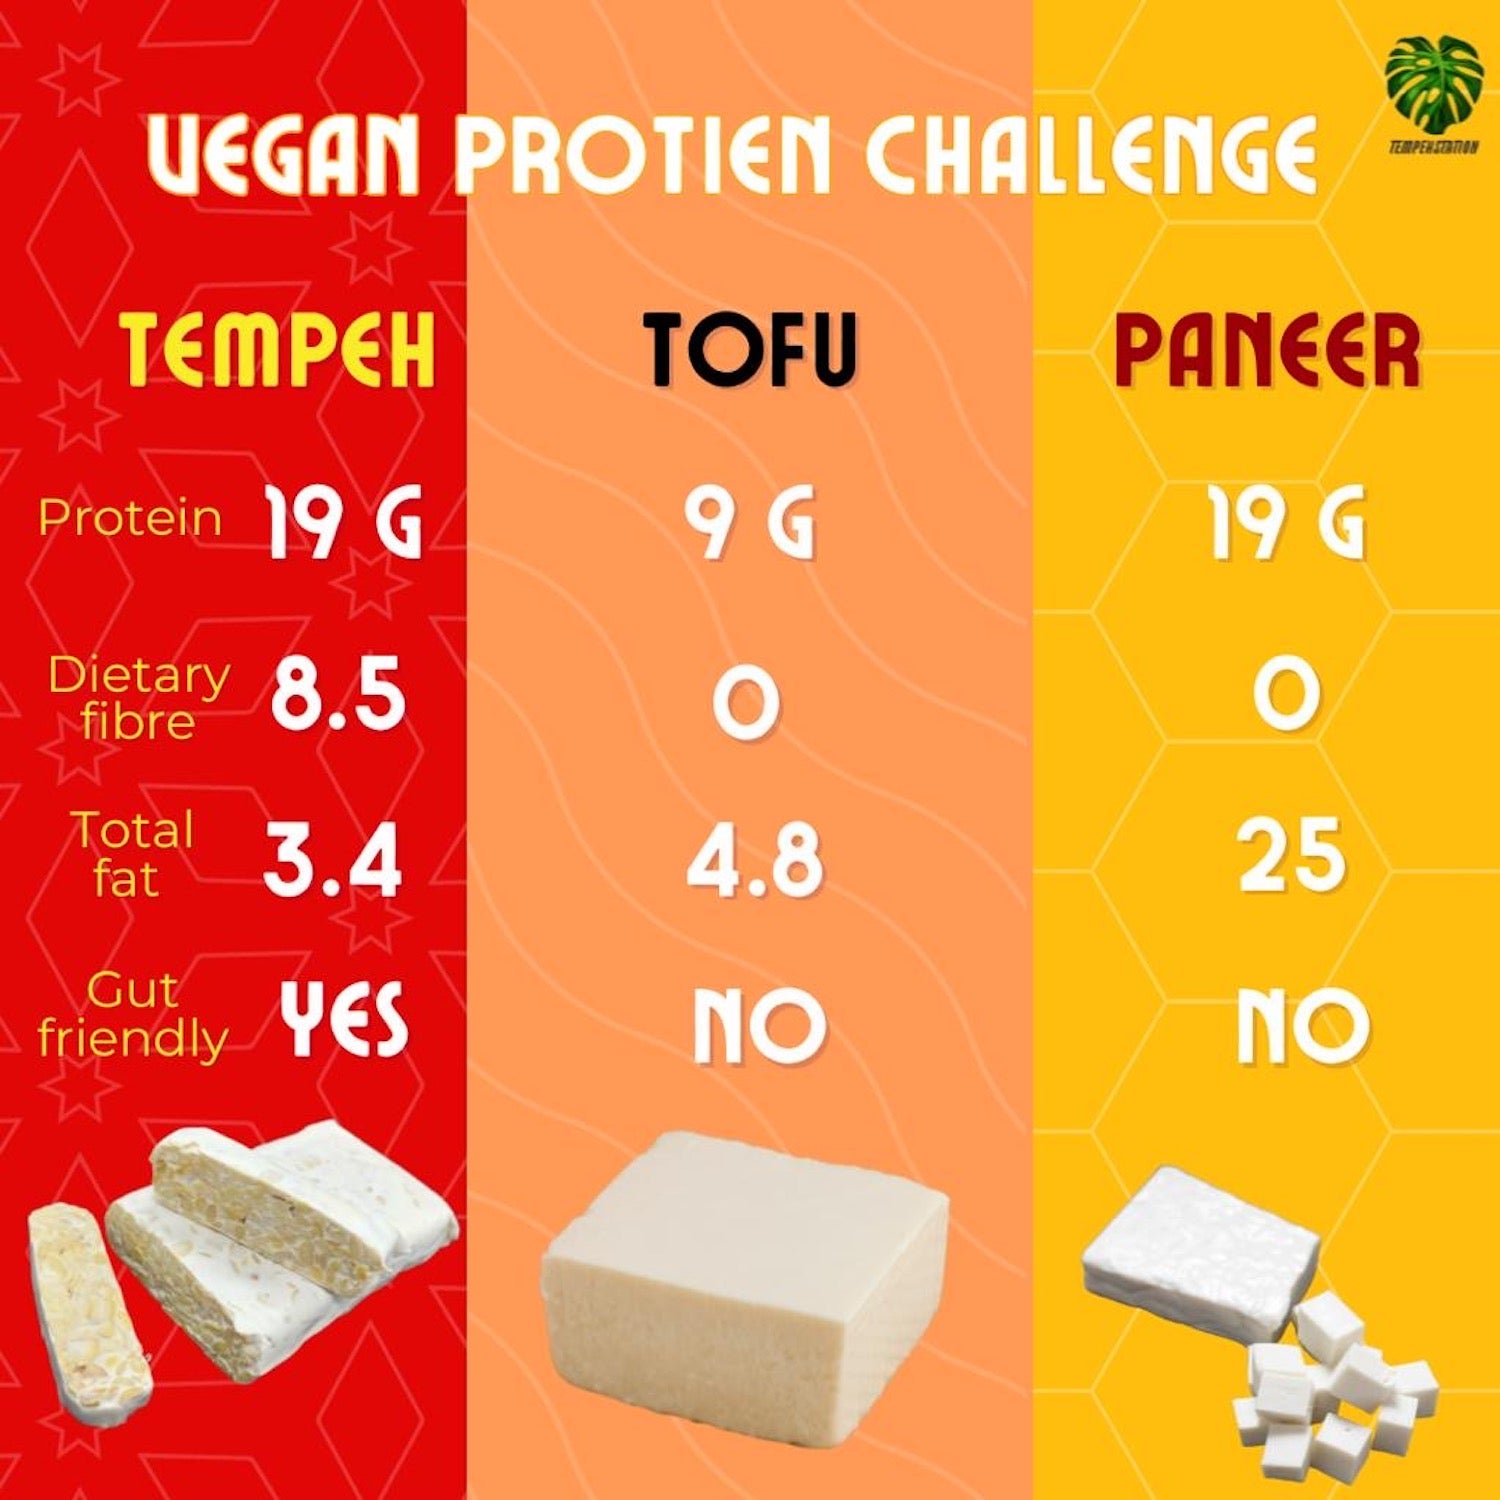 diffrence between tempeh or tofu or paneer